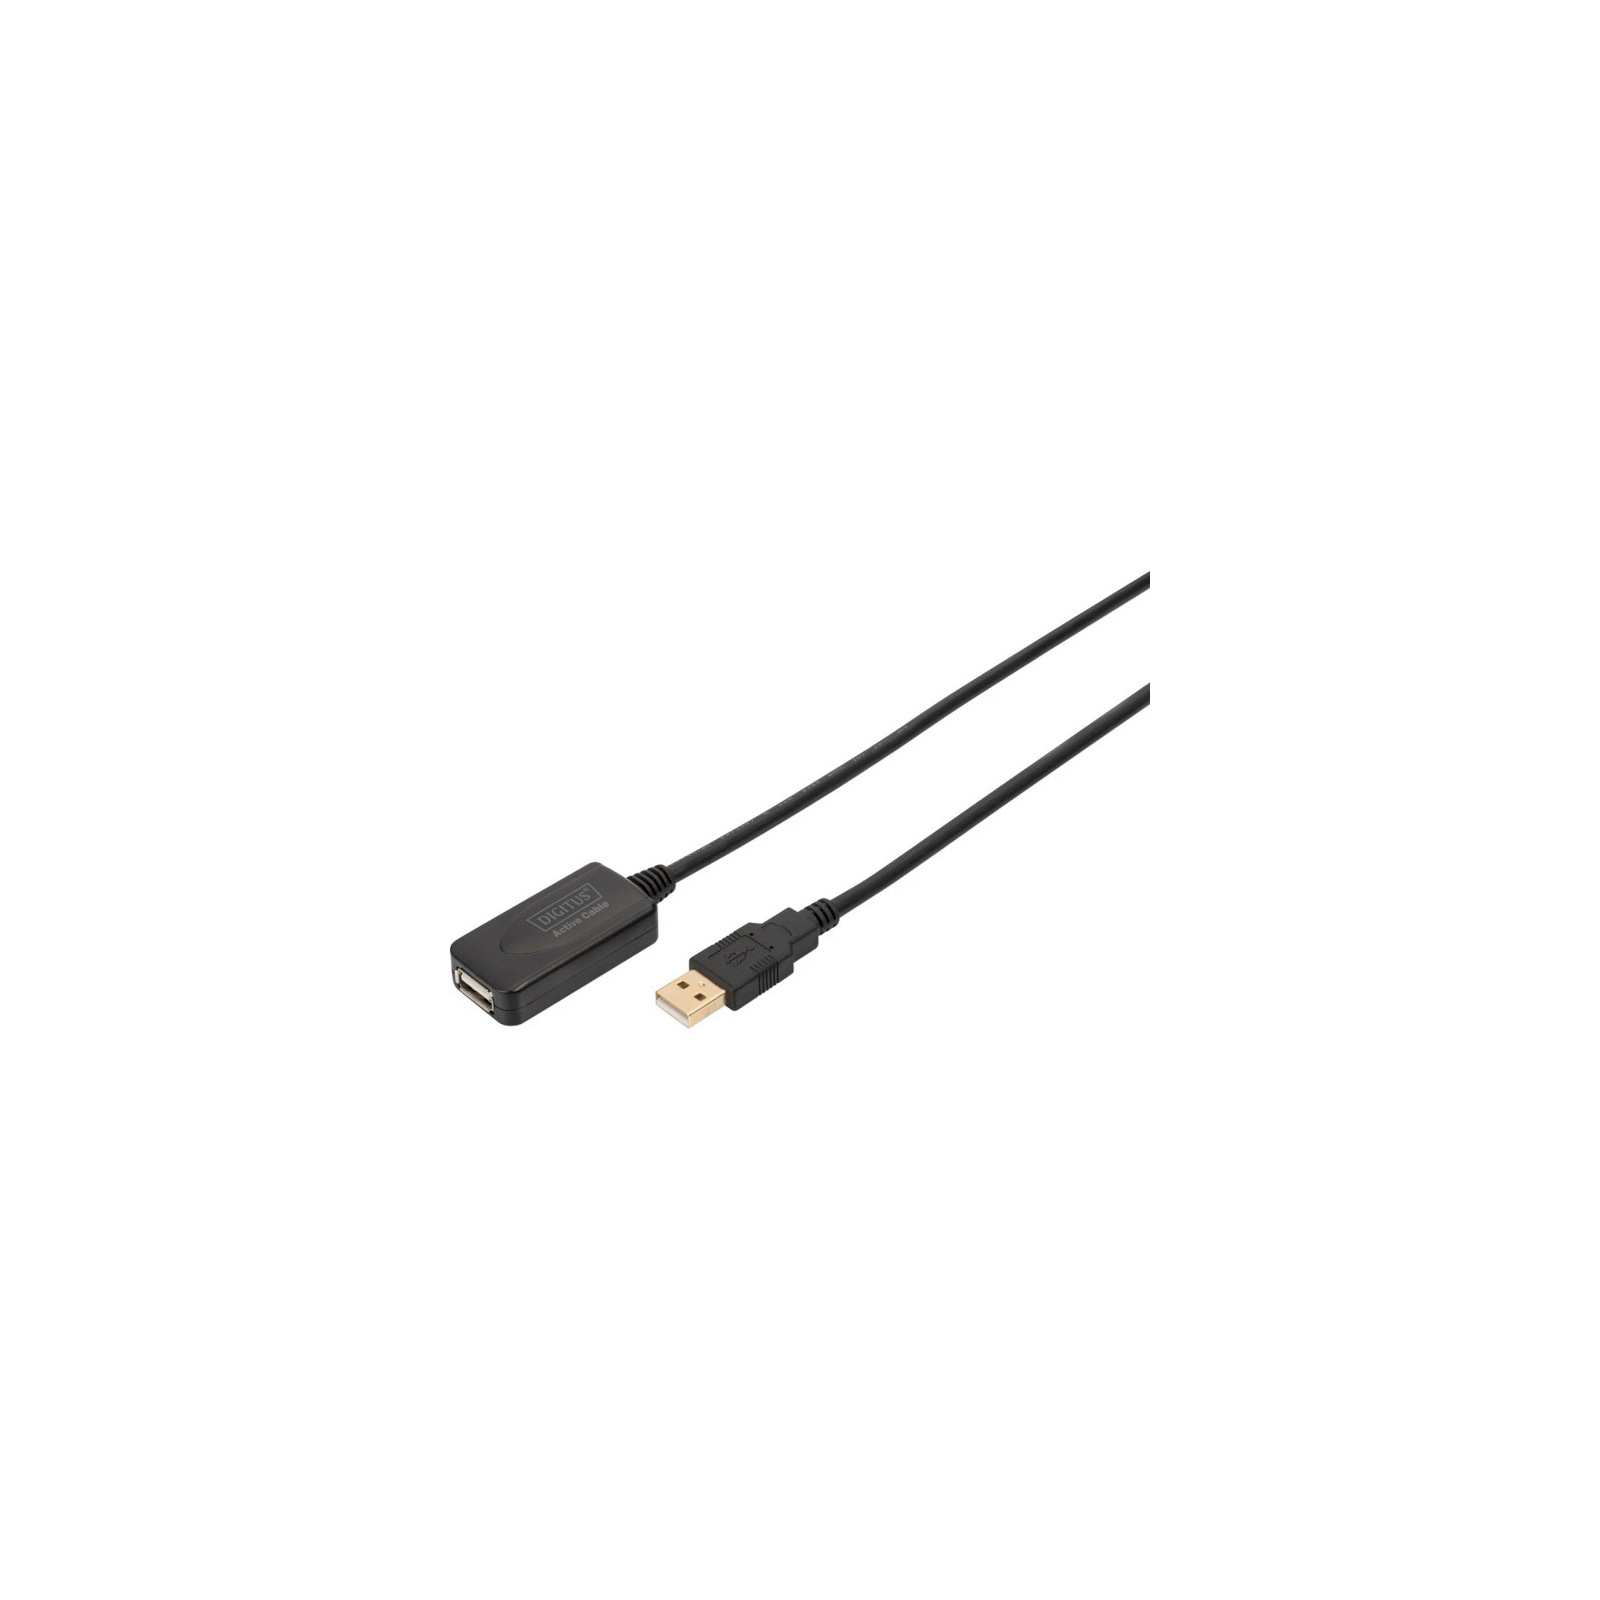 Дата кабель USB 2.0 AM/AF 5.0m active Assmann (DA-70130-4)